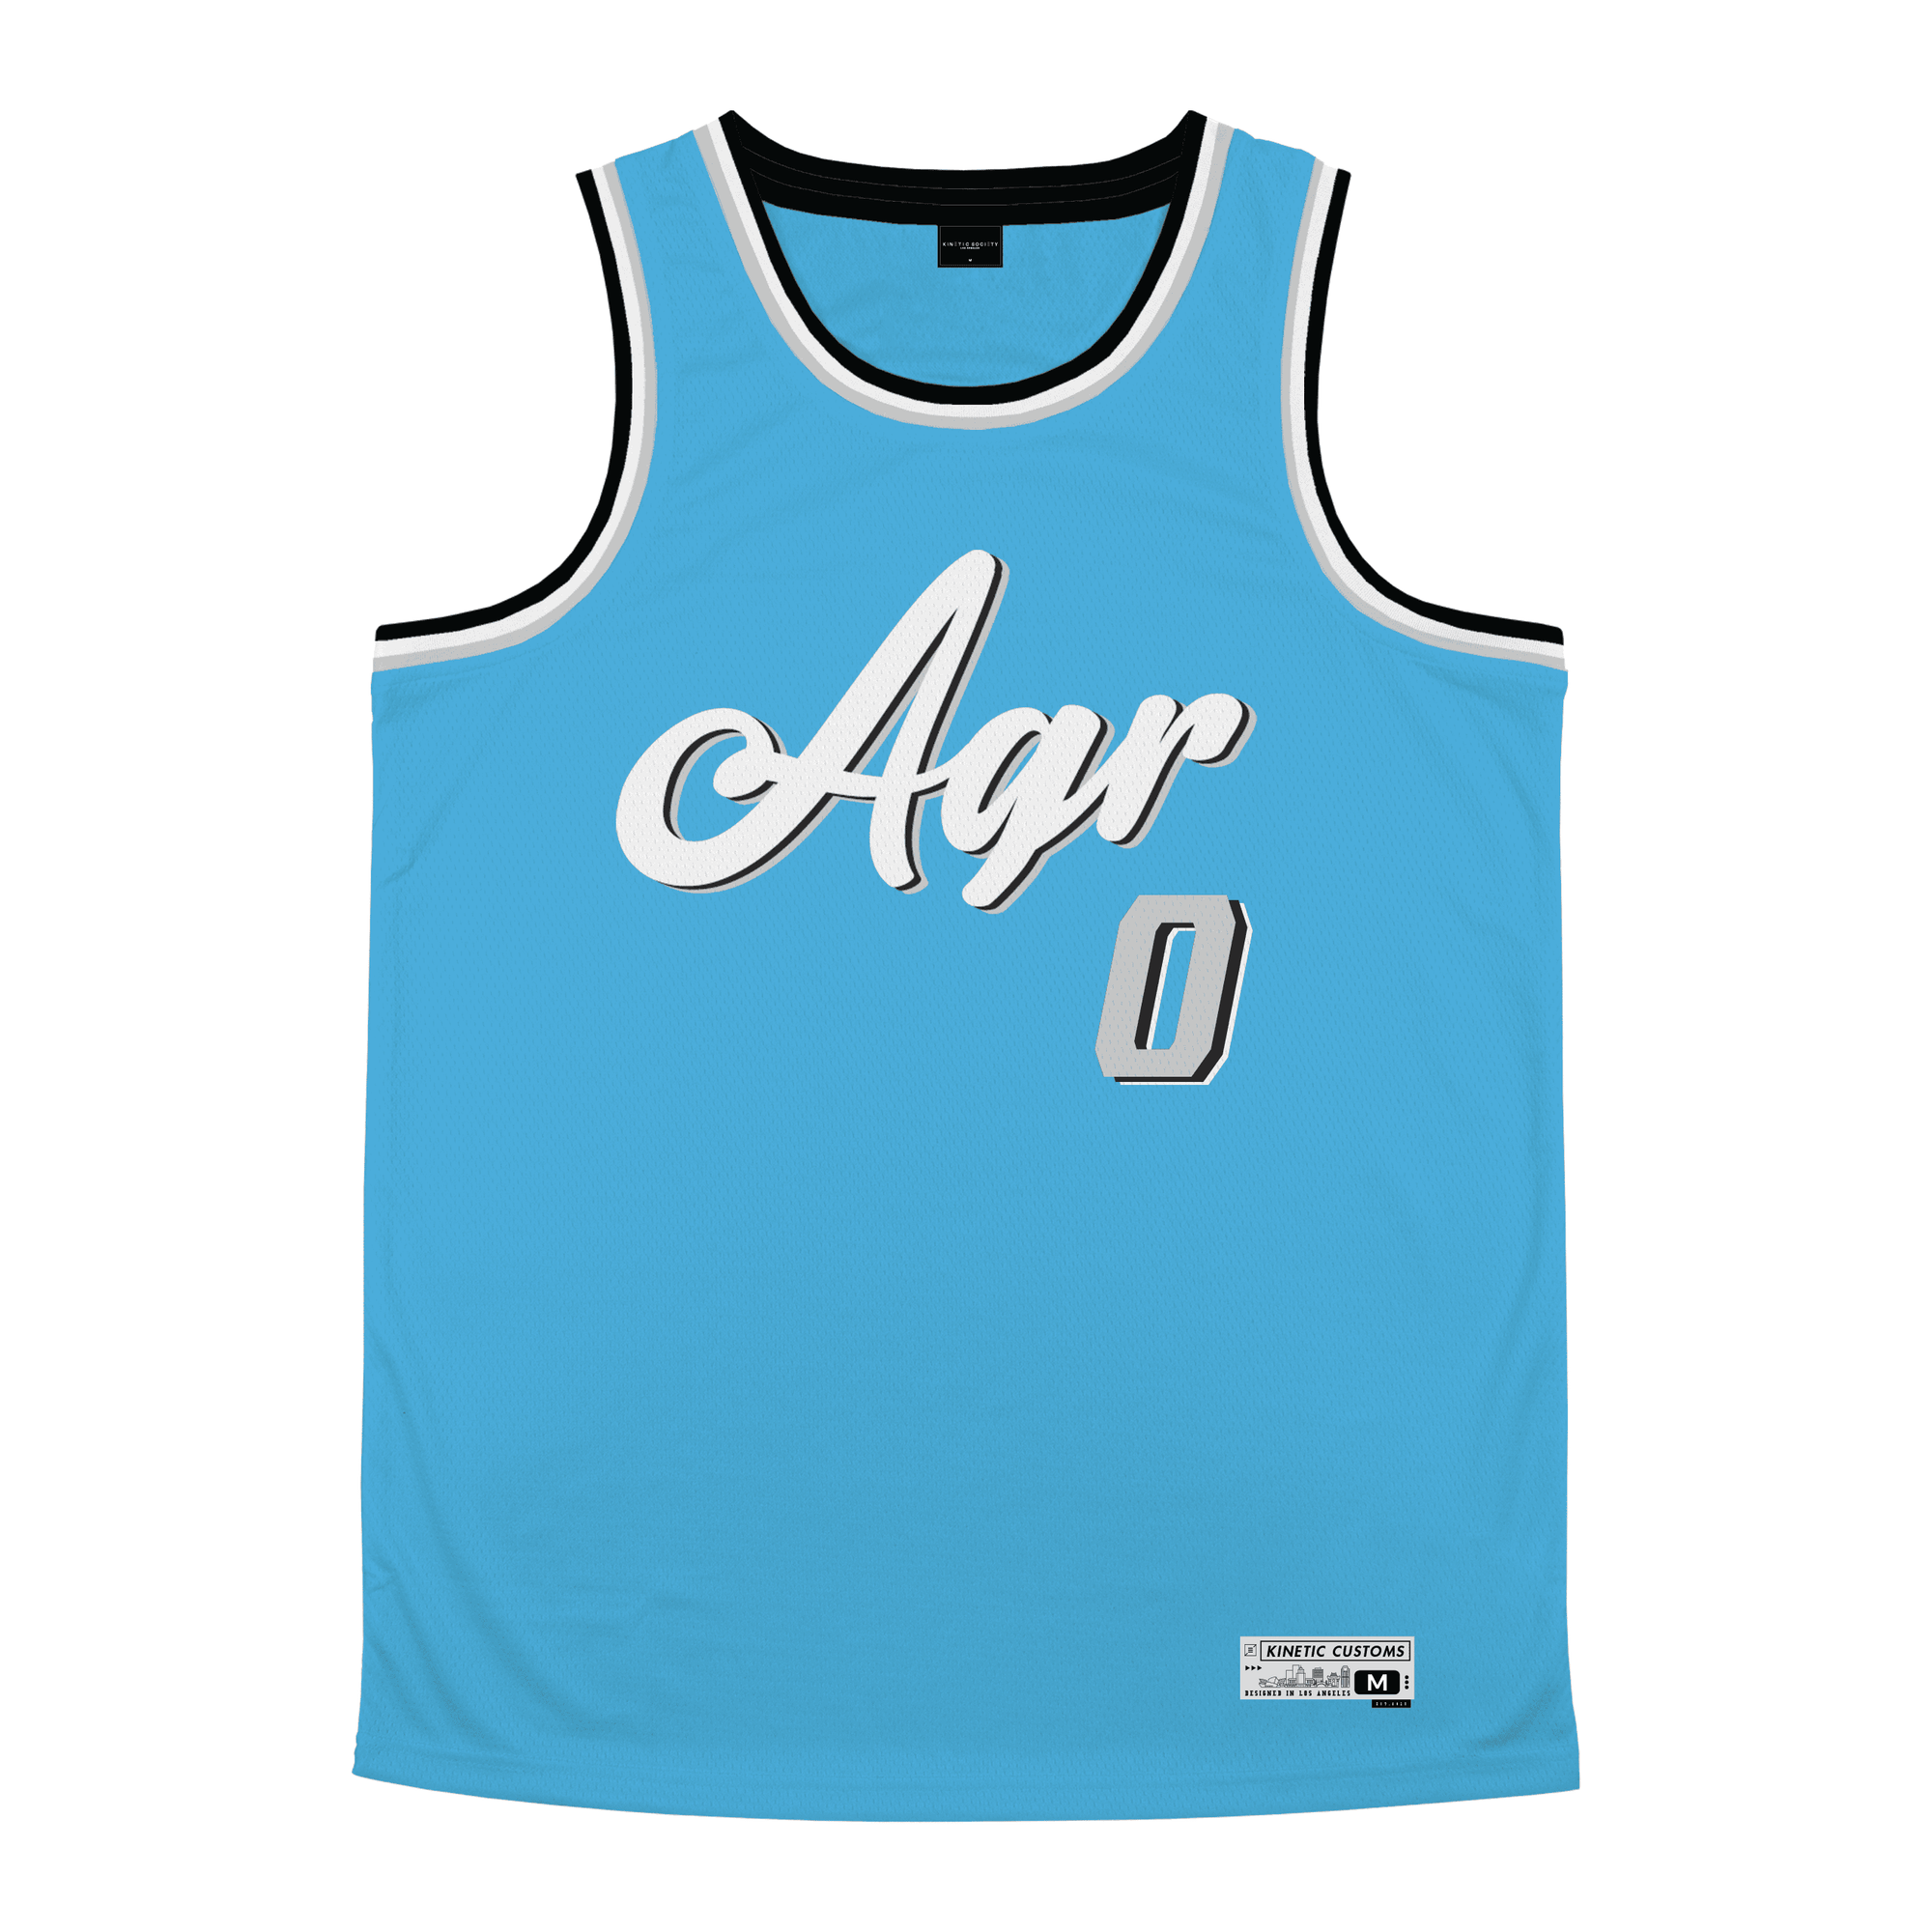 Alpha Gamma Rho - Pacific Mist Basketball Jersey